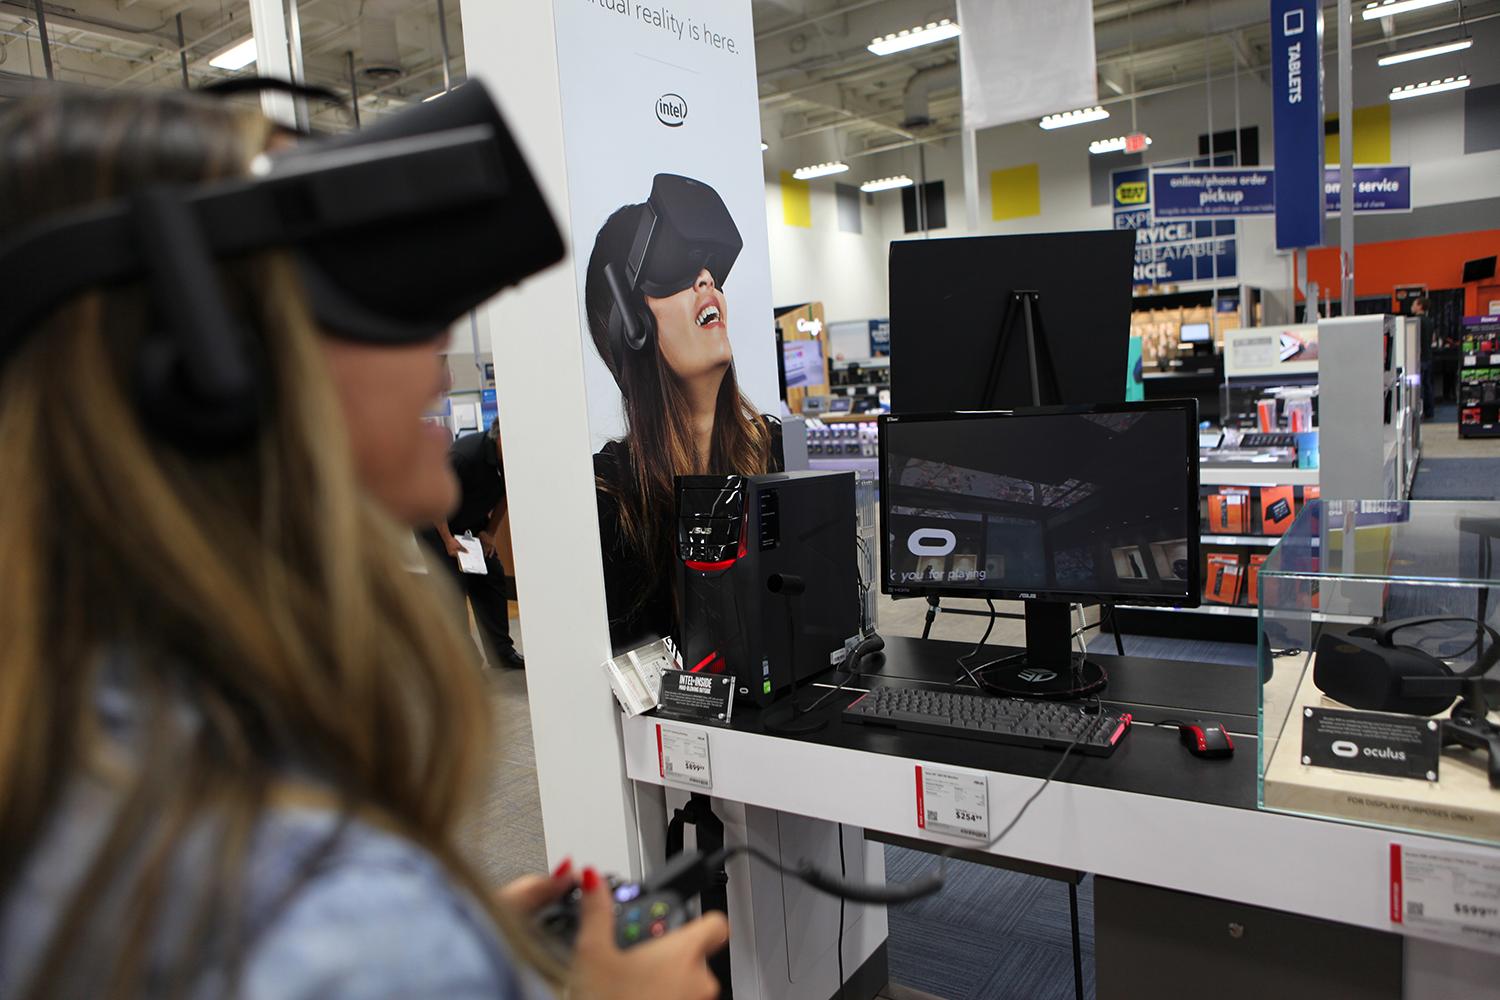 Realidad virtual oculus rift